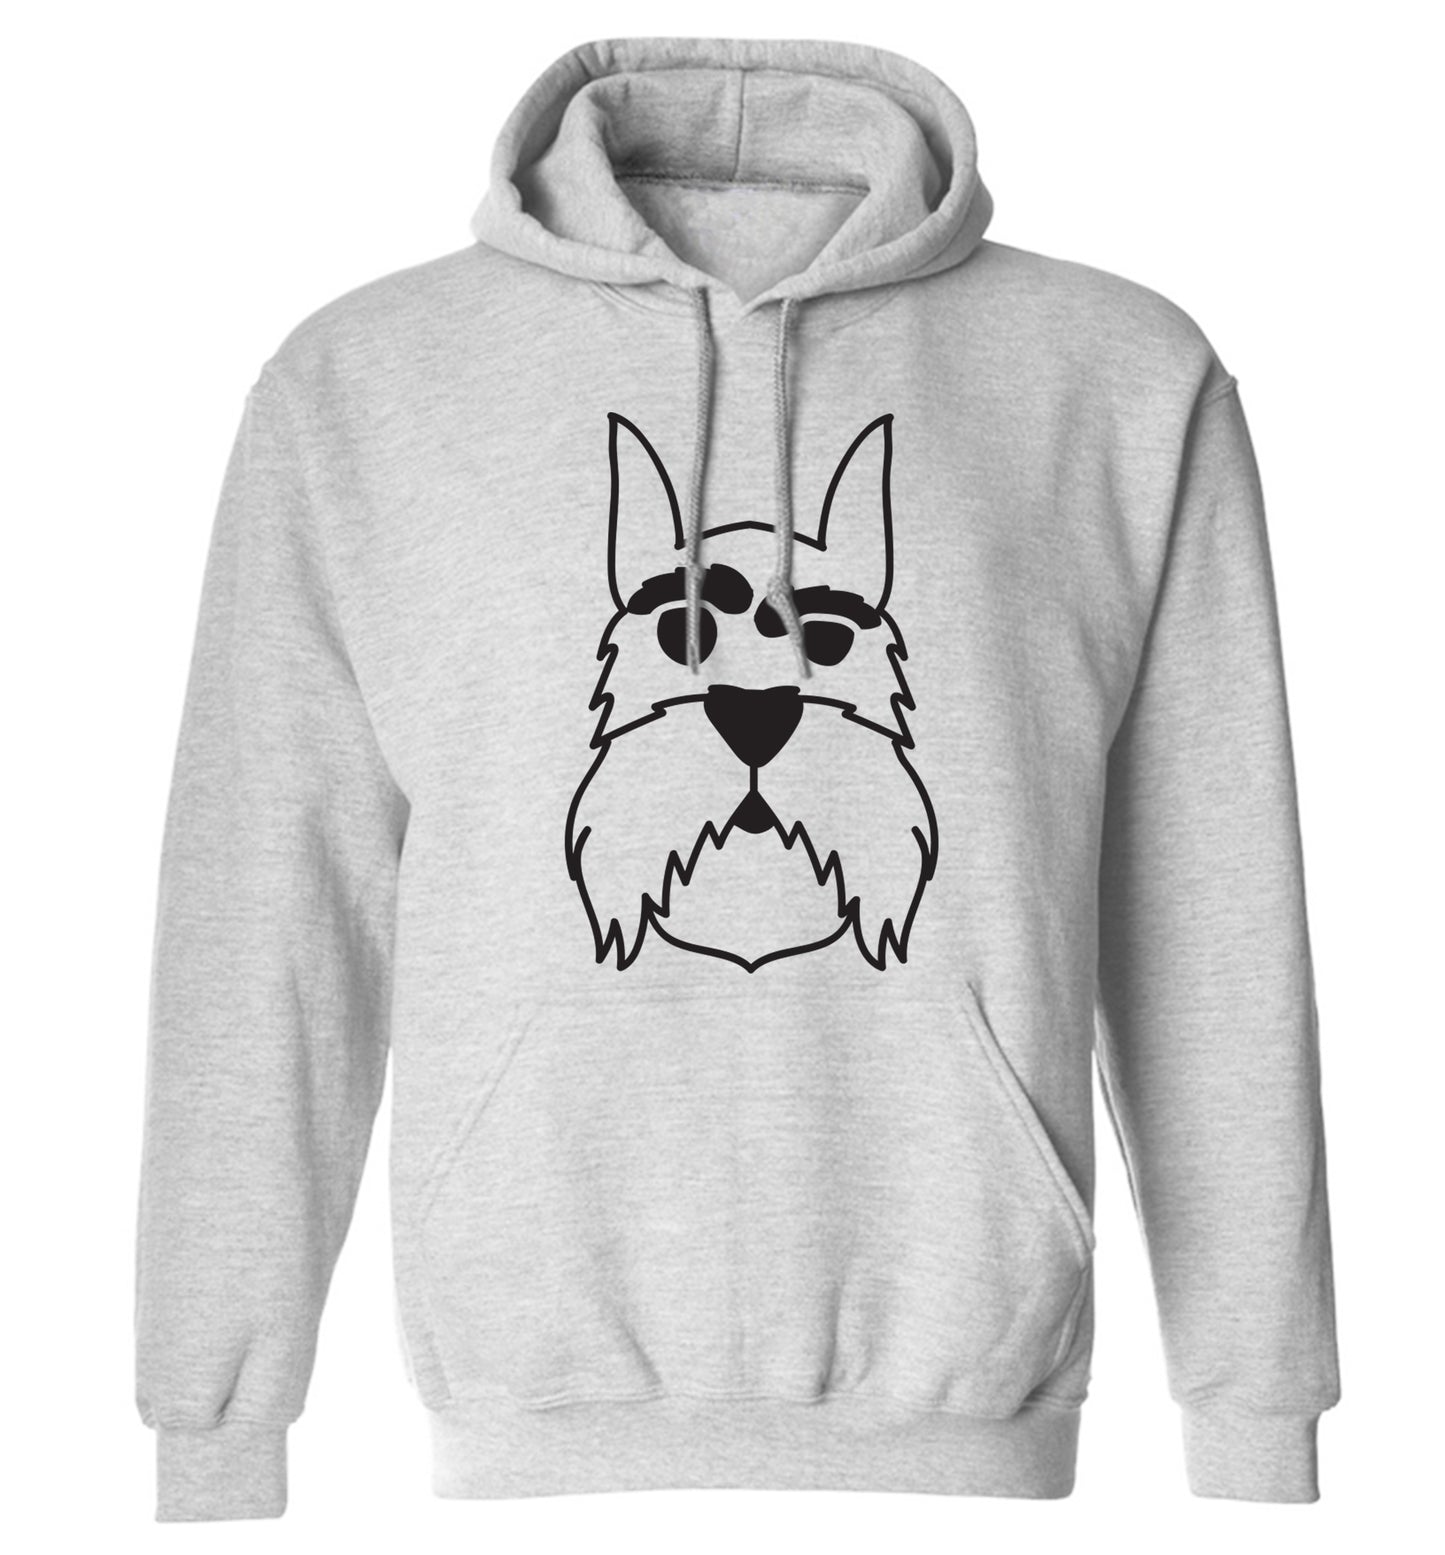 Schnauzer dog illustration adults unisex grey hoodie 2XL